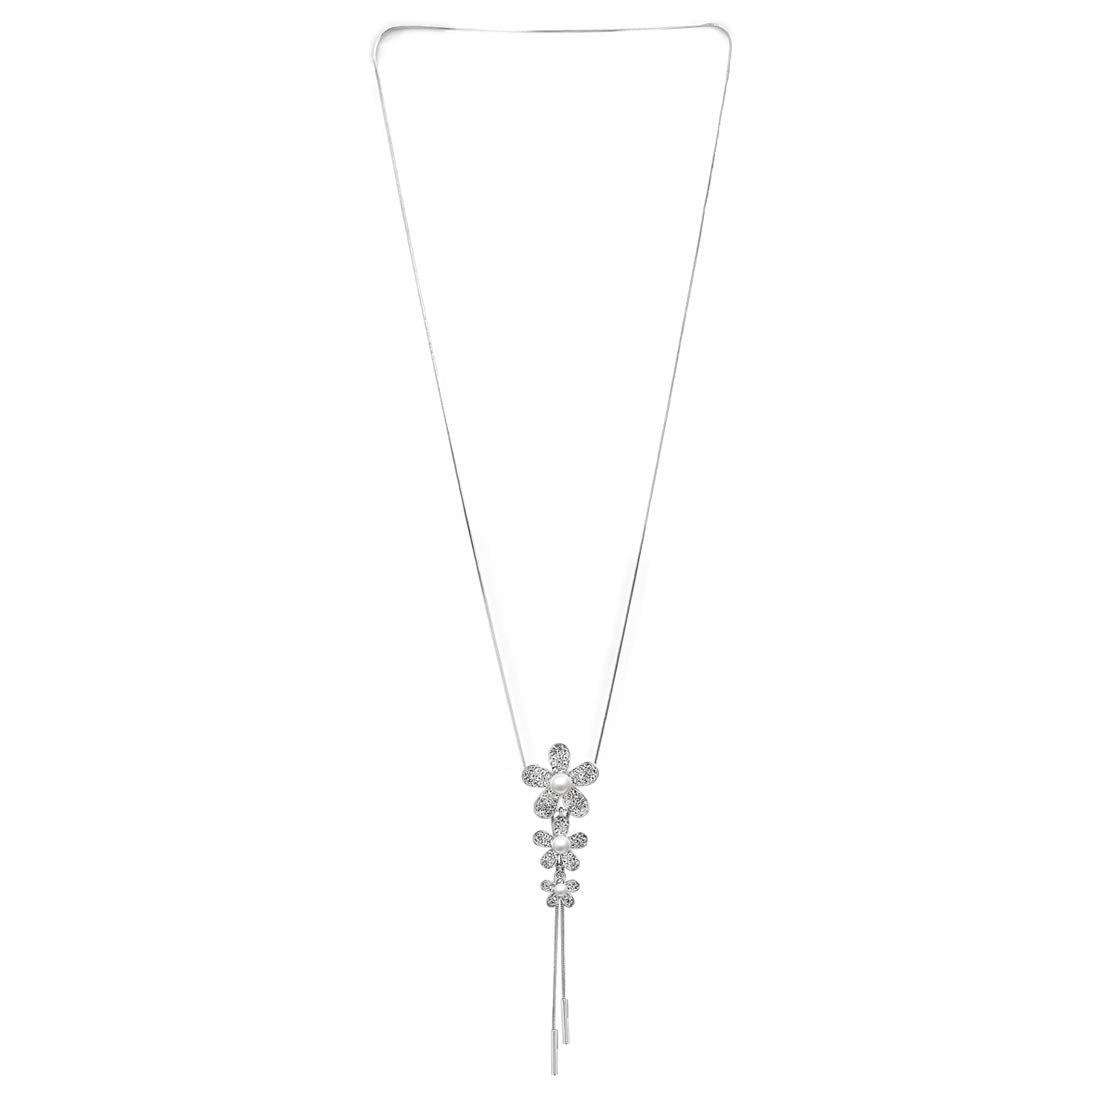 AURELIA long pearl necklace - Carrie Whelan Designs